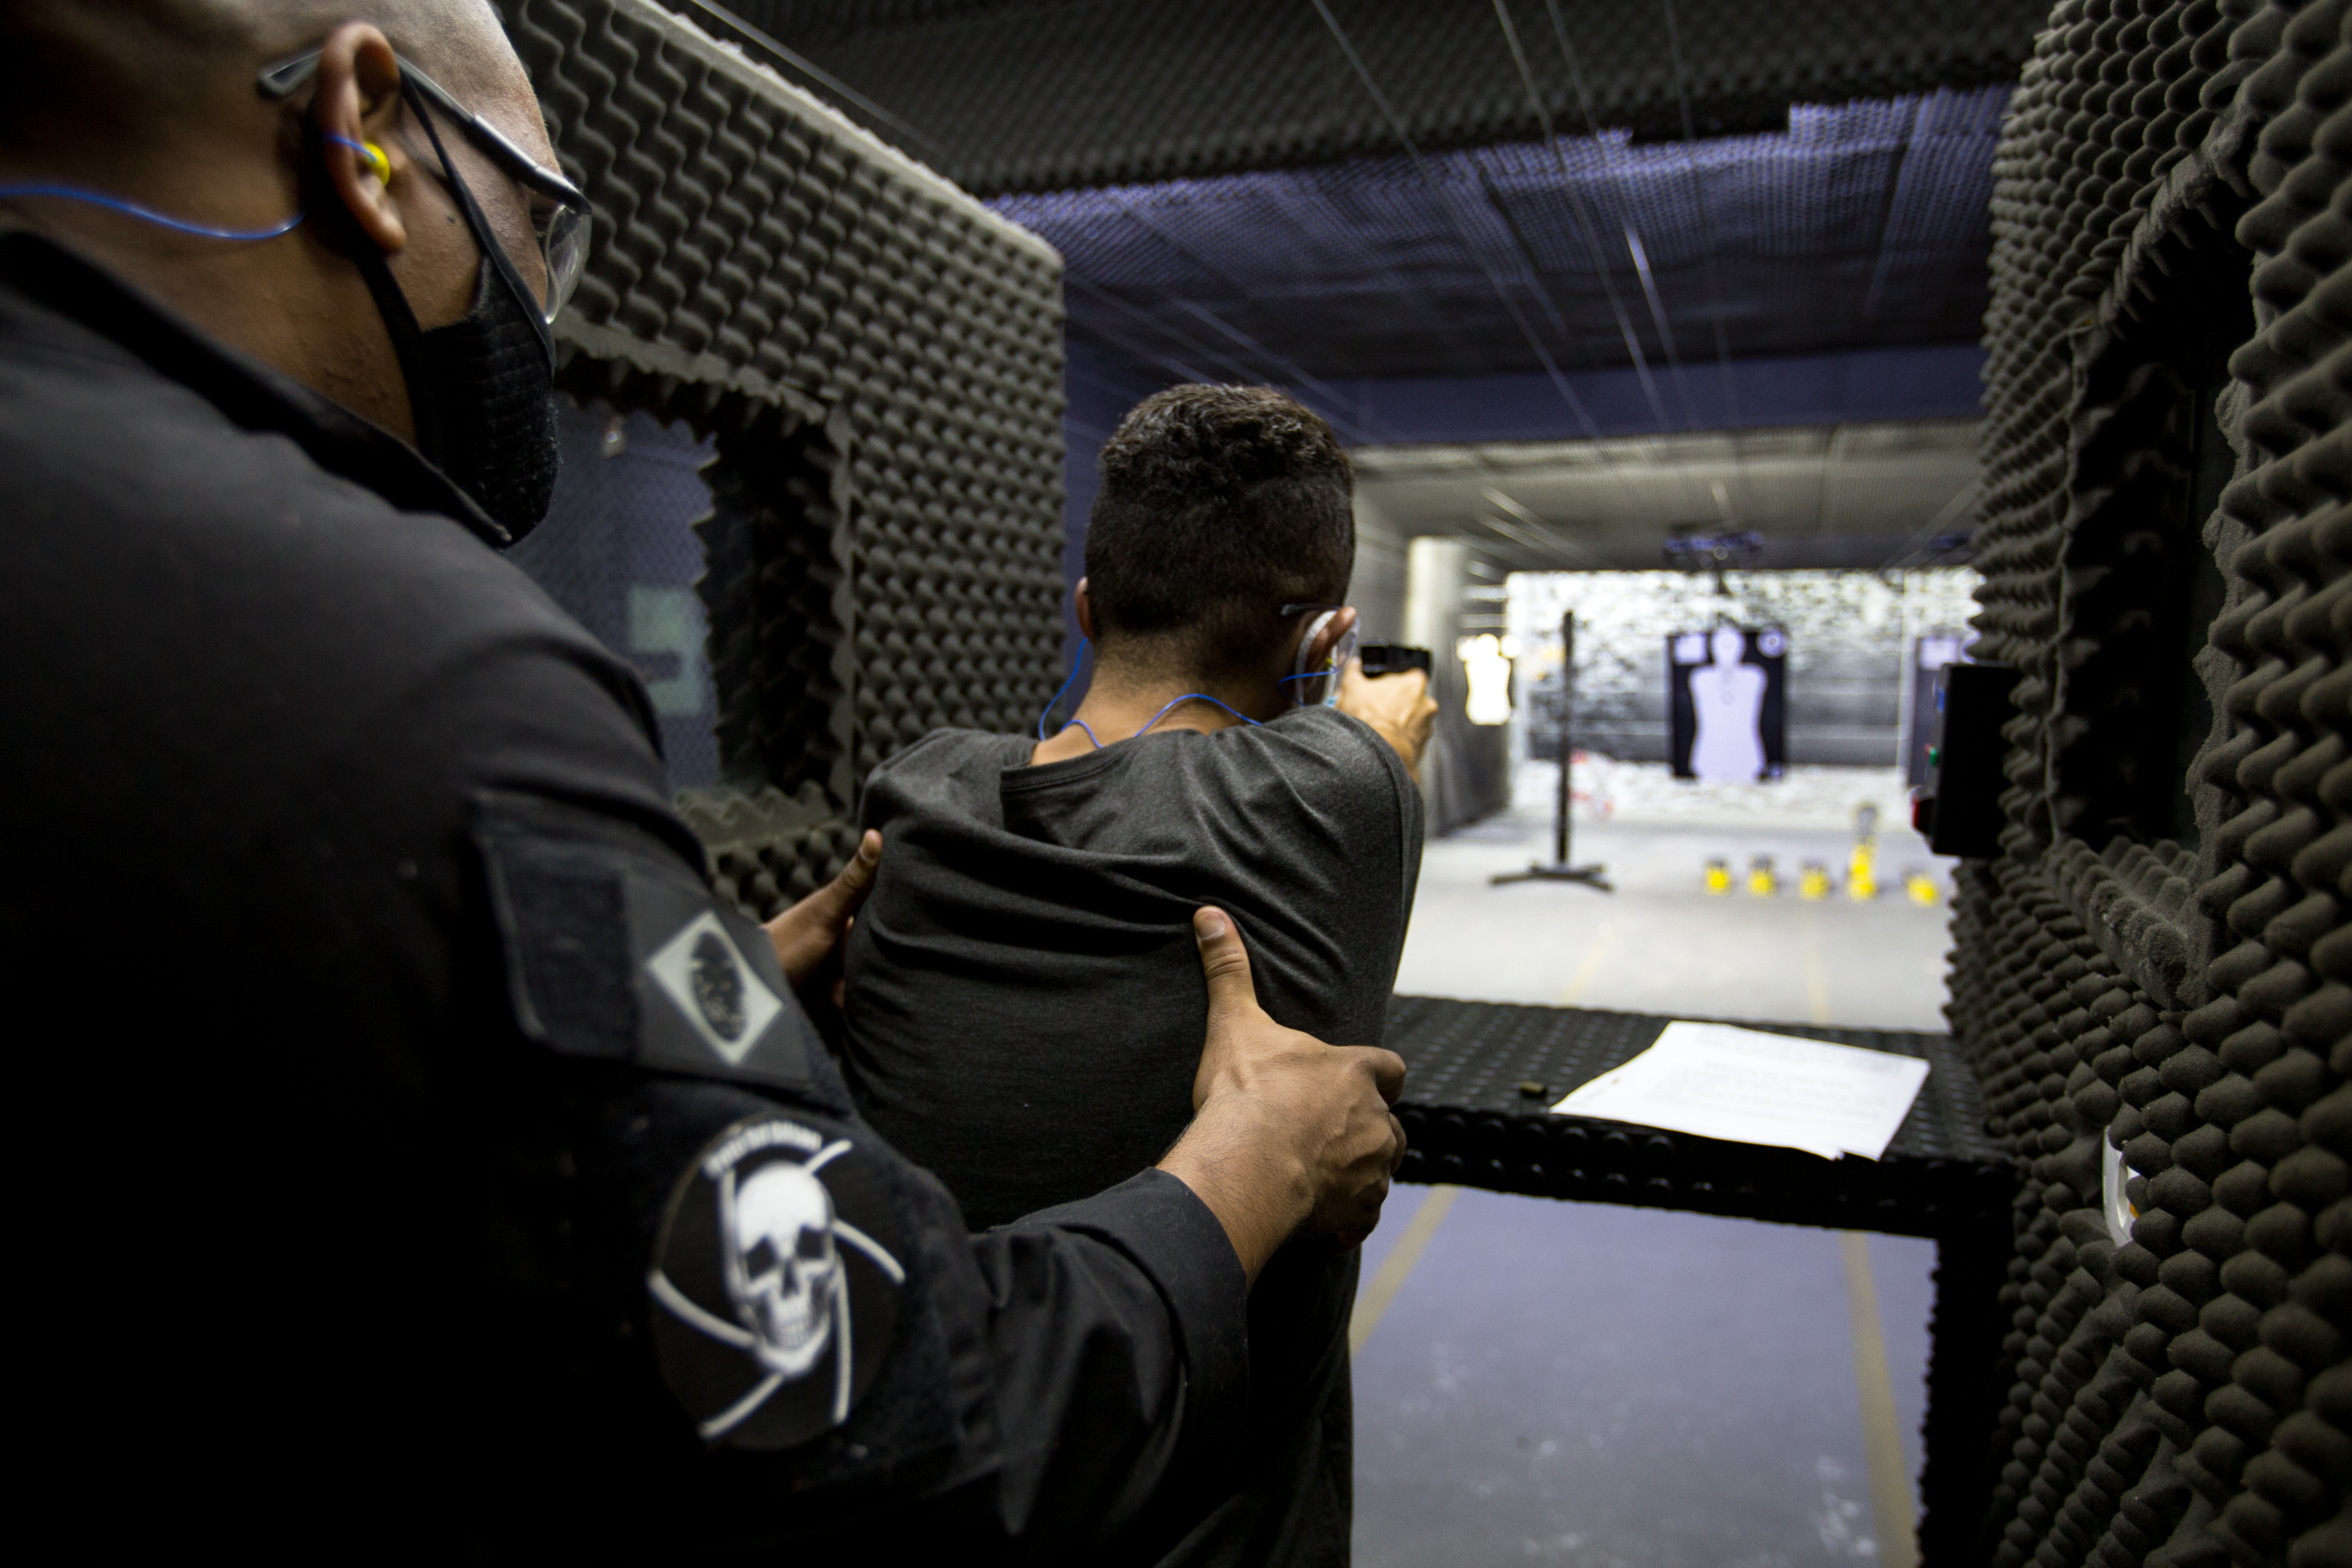 Brazil Gun Club Shooting Range